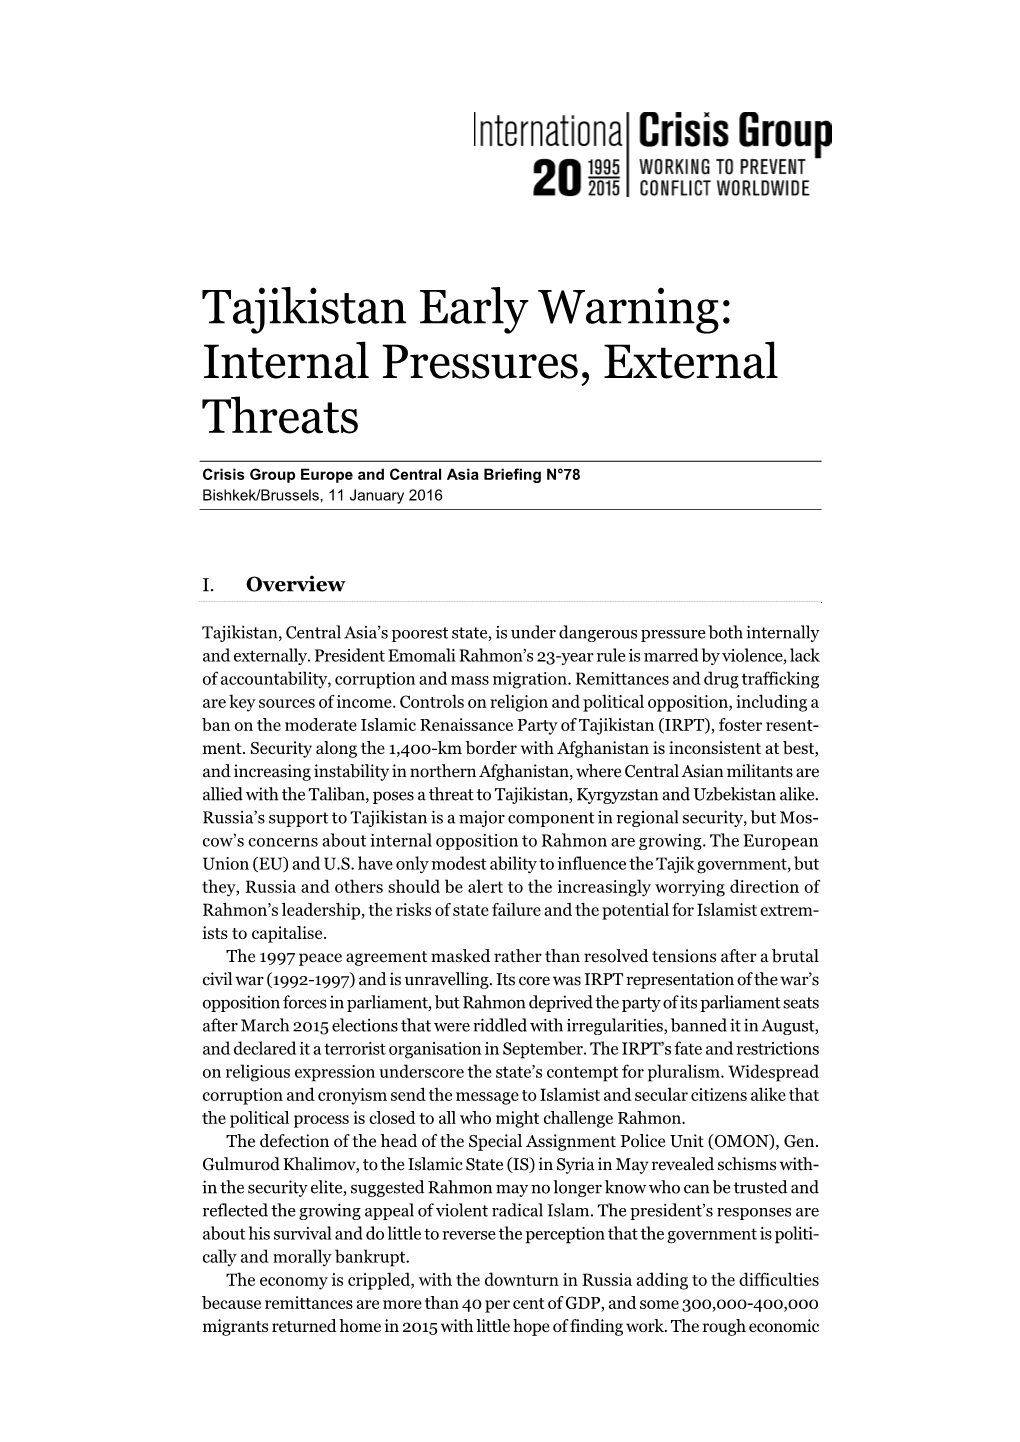 Tajikistan Early Warning: Internal Pressures, External Threats